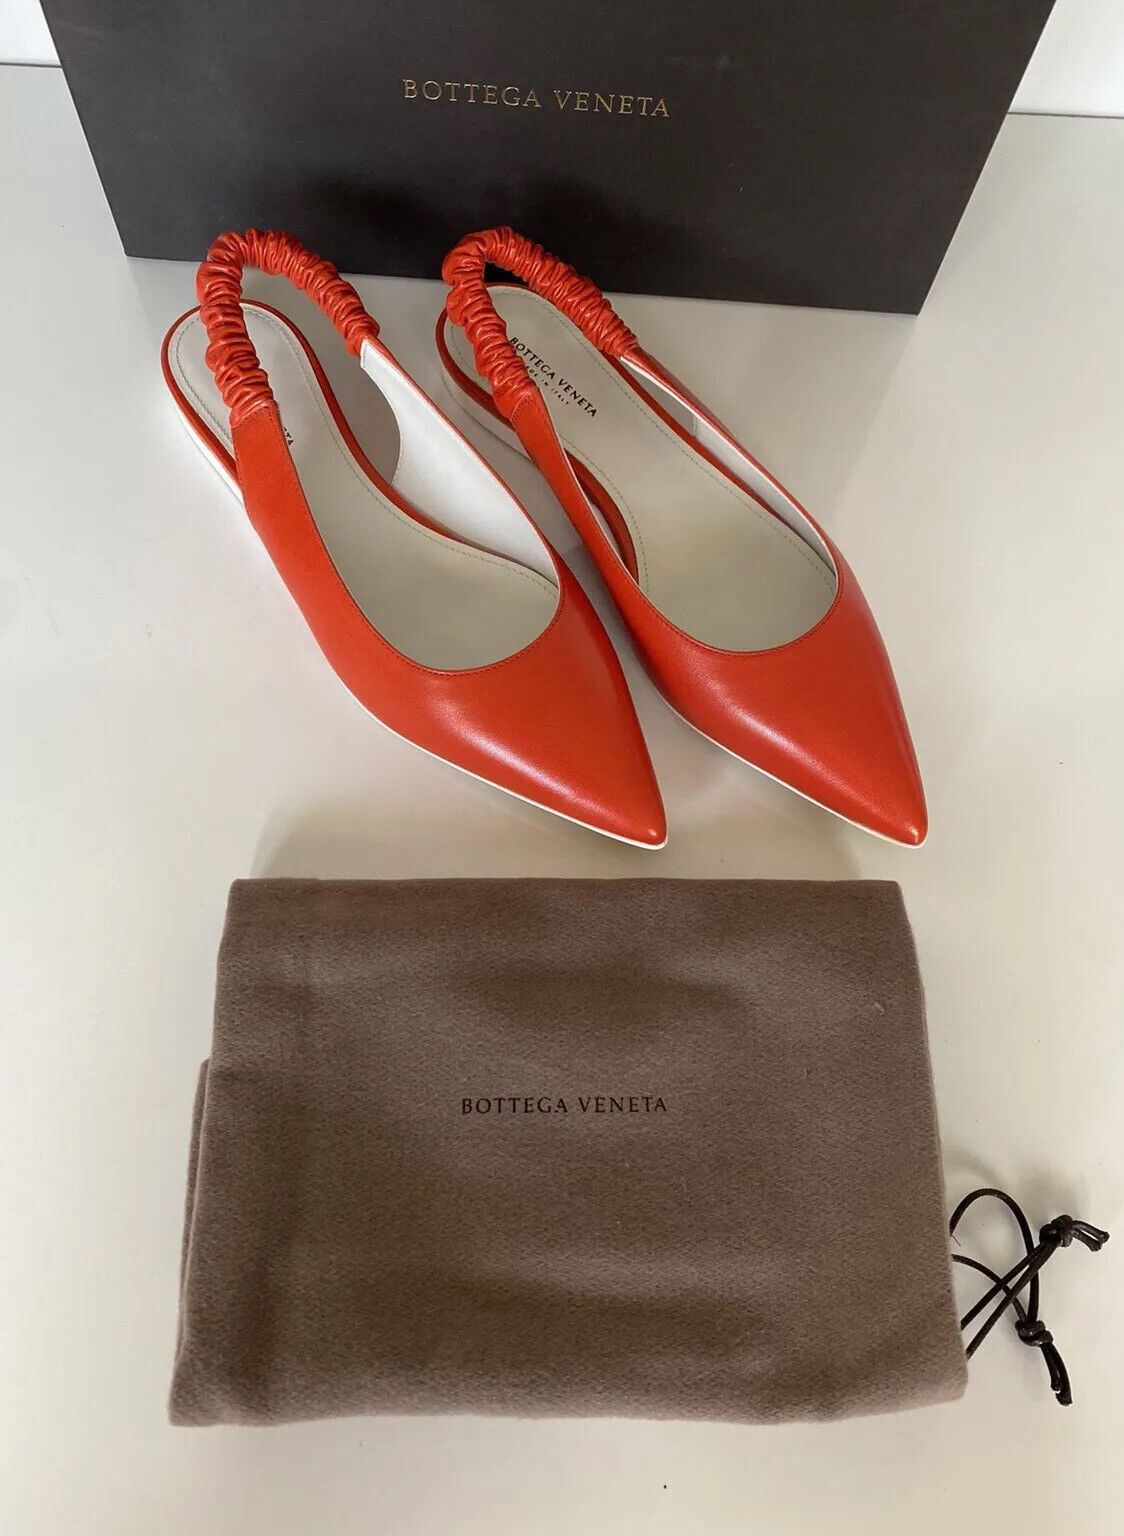 NIB $620 Bottega Veneta Women's Flat Pump Reddish Orange Shoes 9 US 565640 Italy